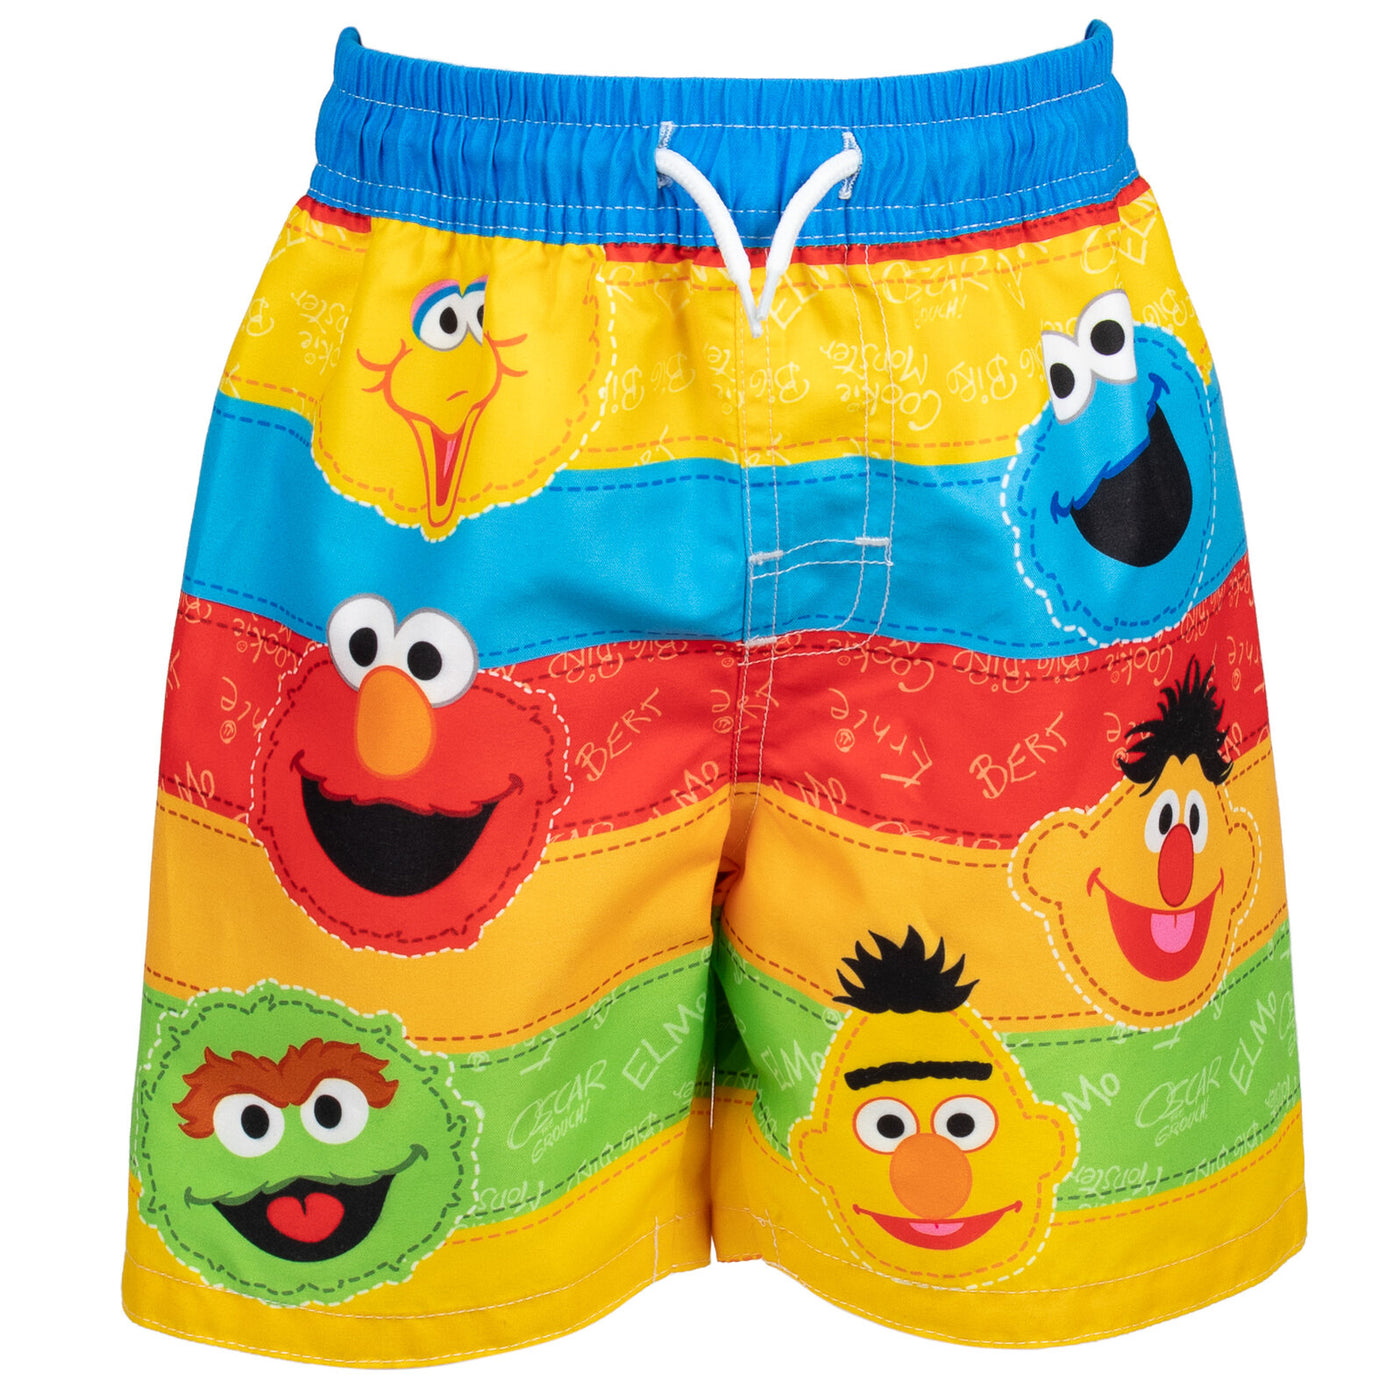 Sesame Street Zip Up Sunsuit Rash Guard and Swim Trunks 3 Piece Swimsuit Set